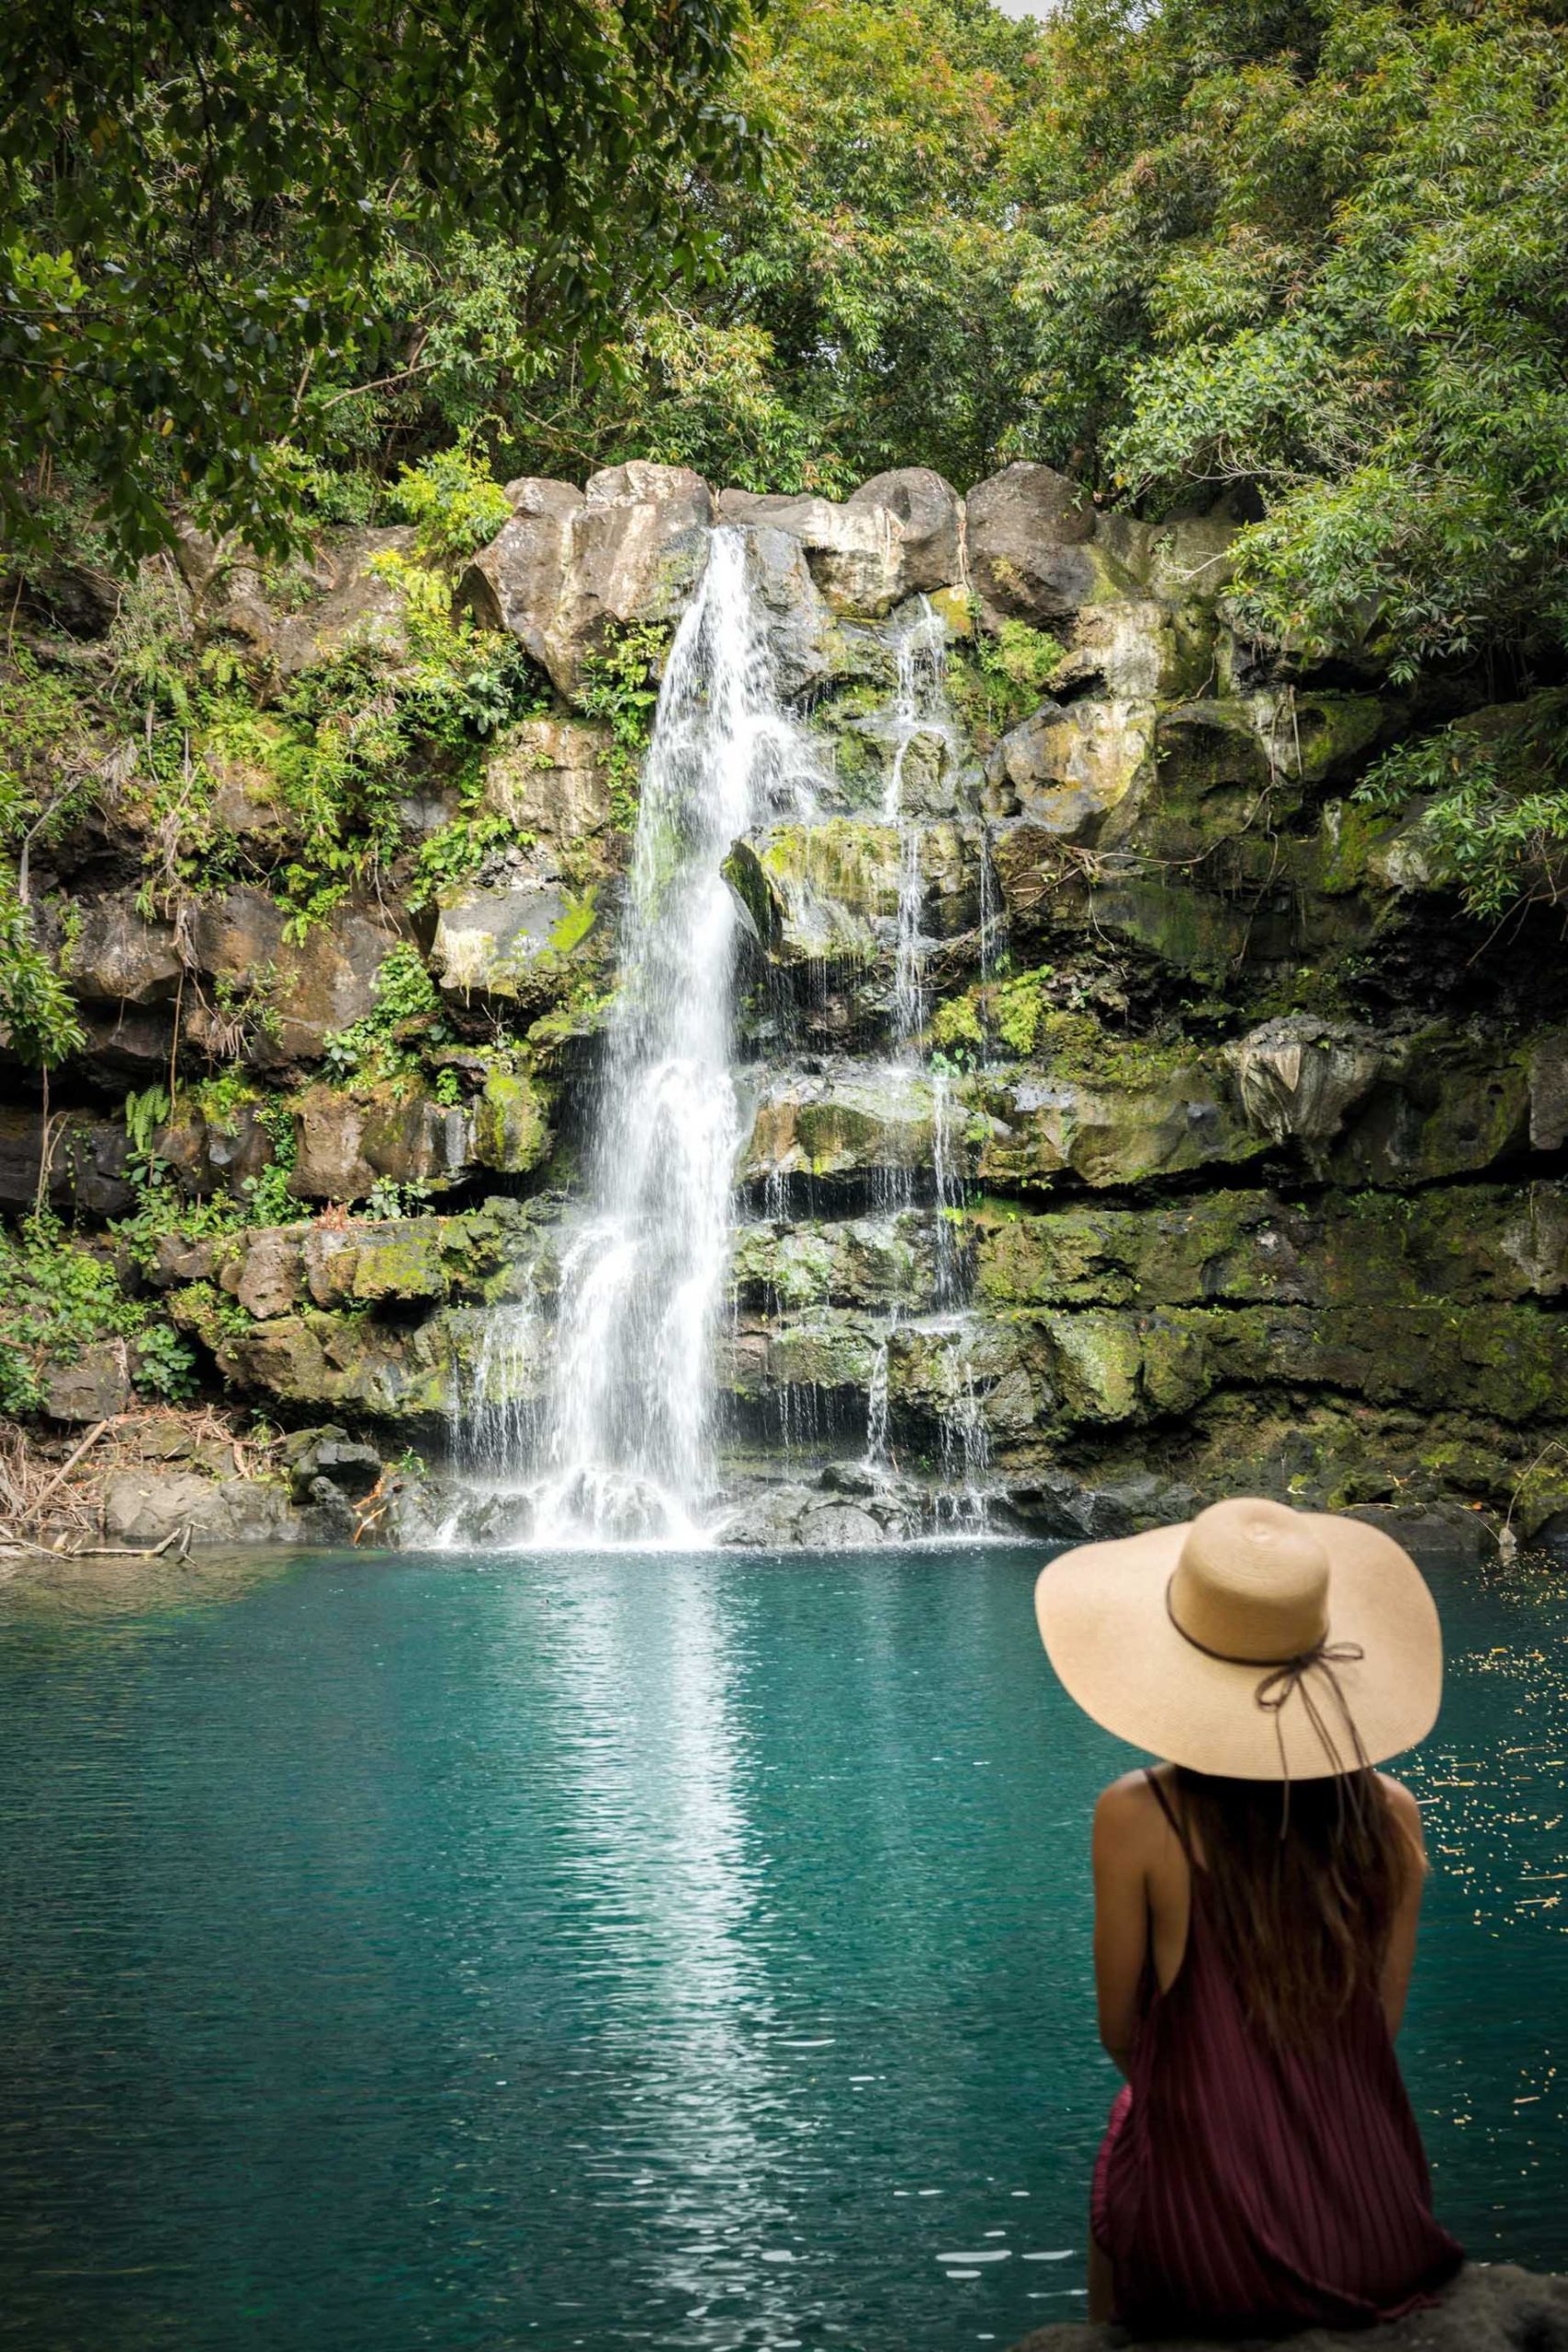 Anantara Iko Mauritius Resort & Villas – Plaine Magnien, Mauritius – Chamarel Waterfall Pool